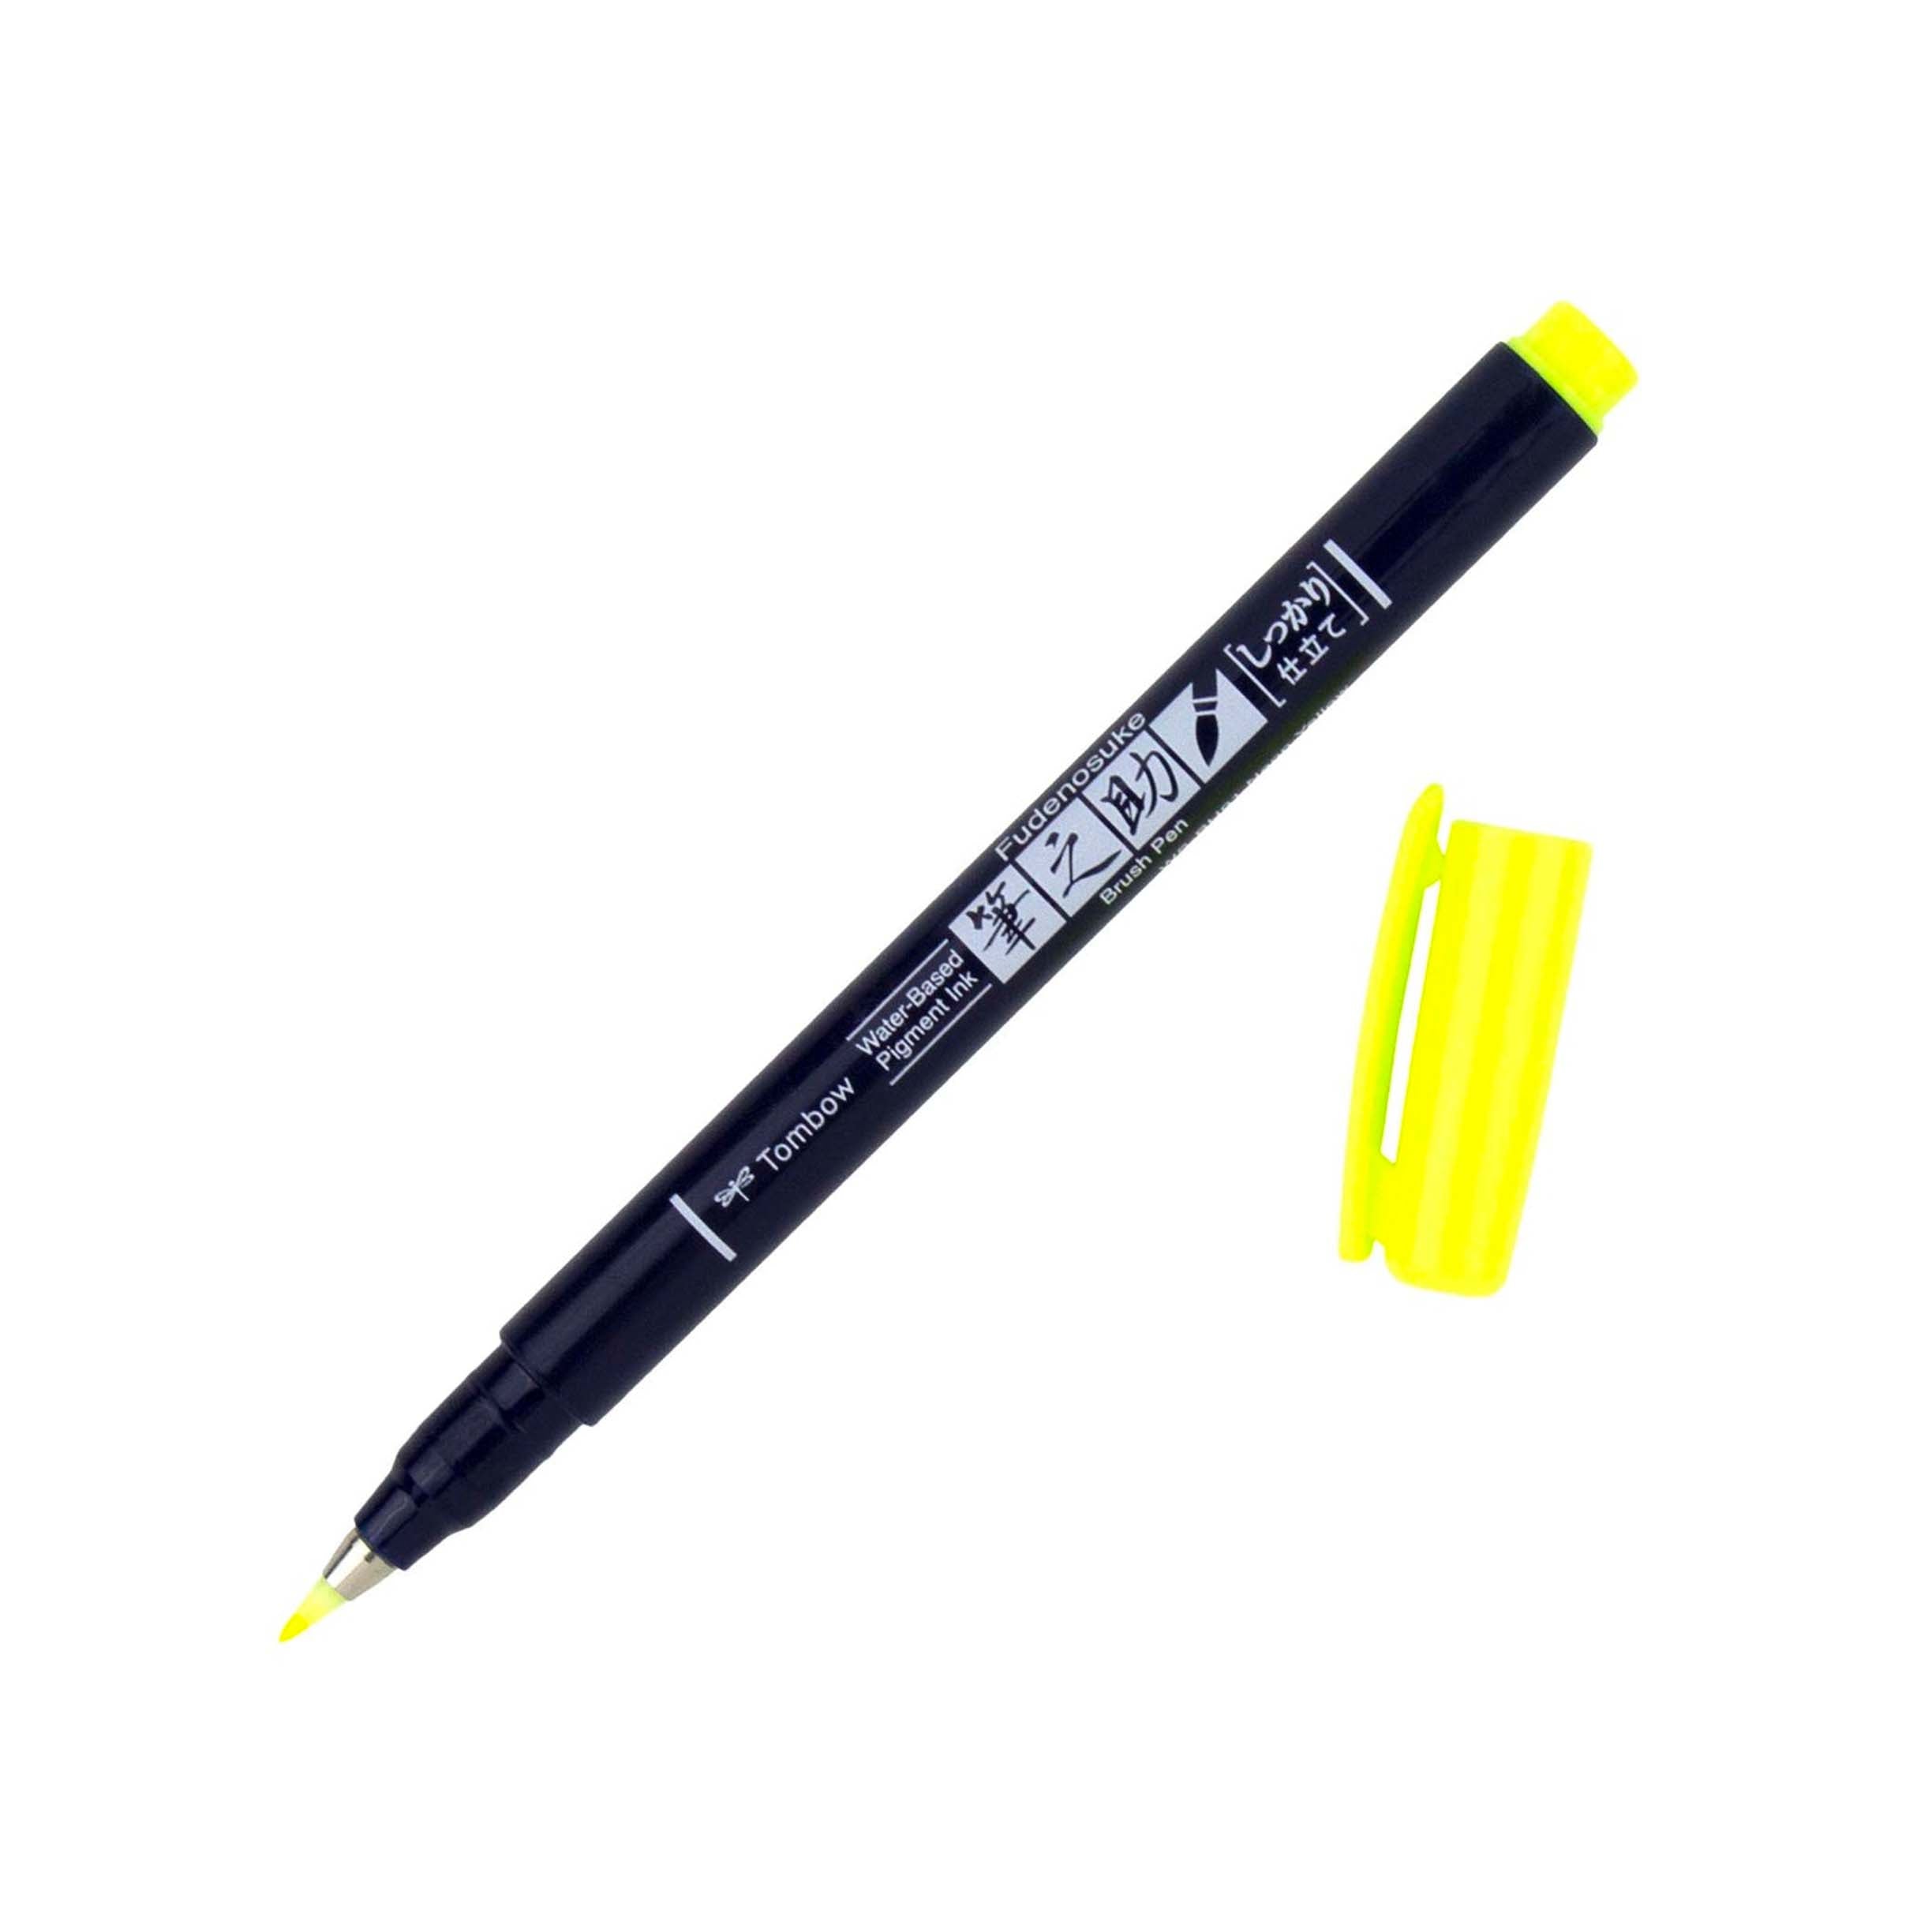 Tombow Fudenosuke Neon Brush Pen